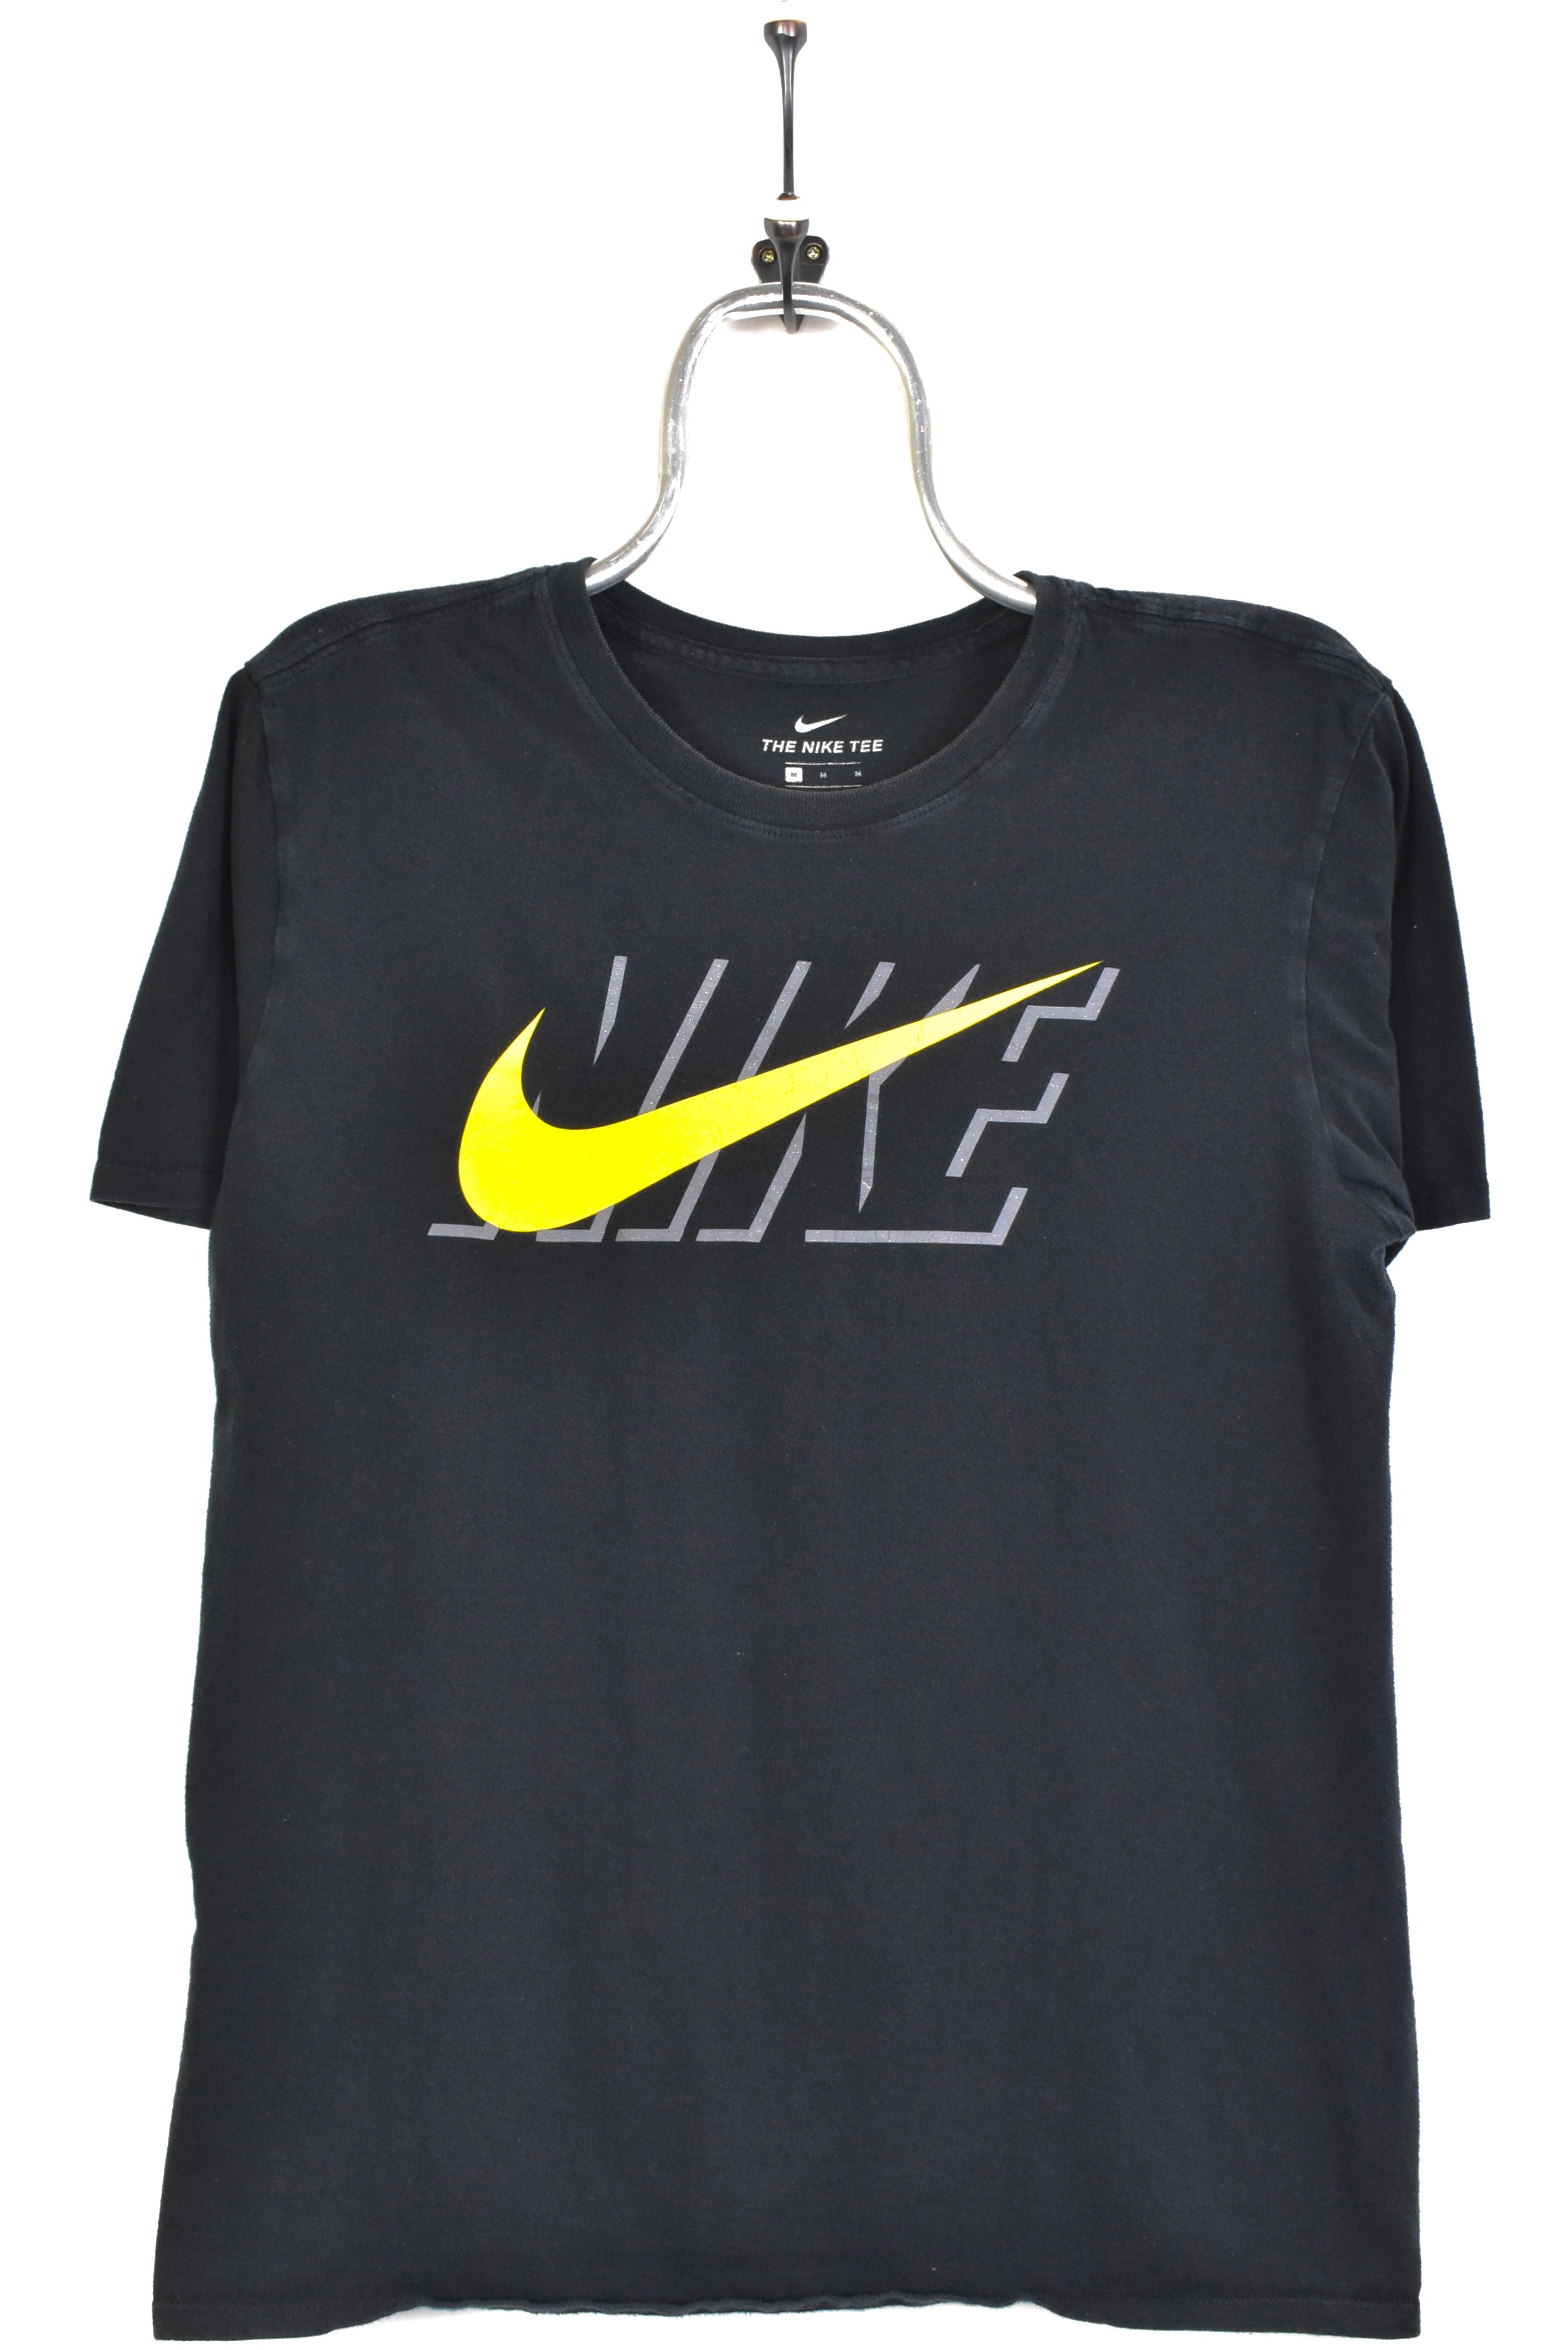 Women's modern Nike shirt, short sleeve black graphic tee - medium NIKE